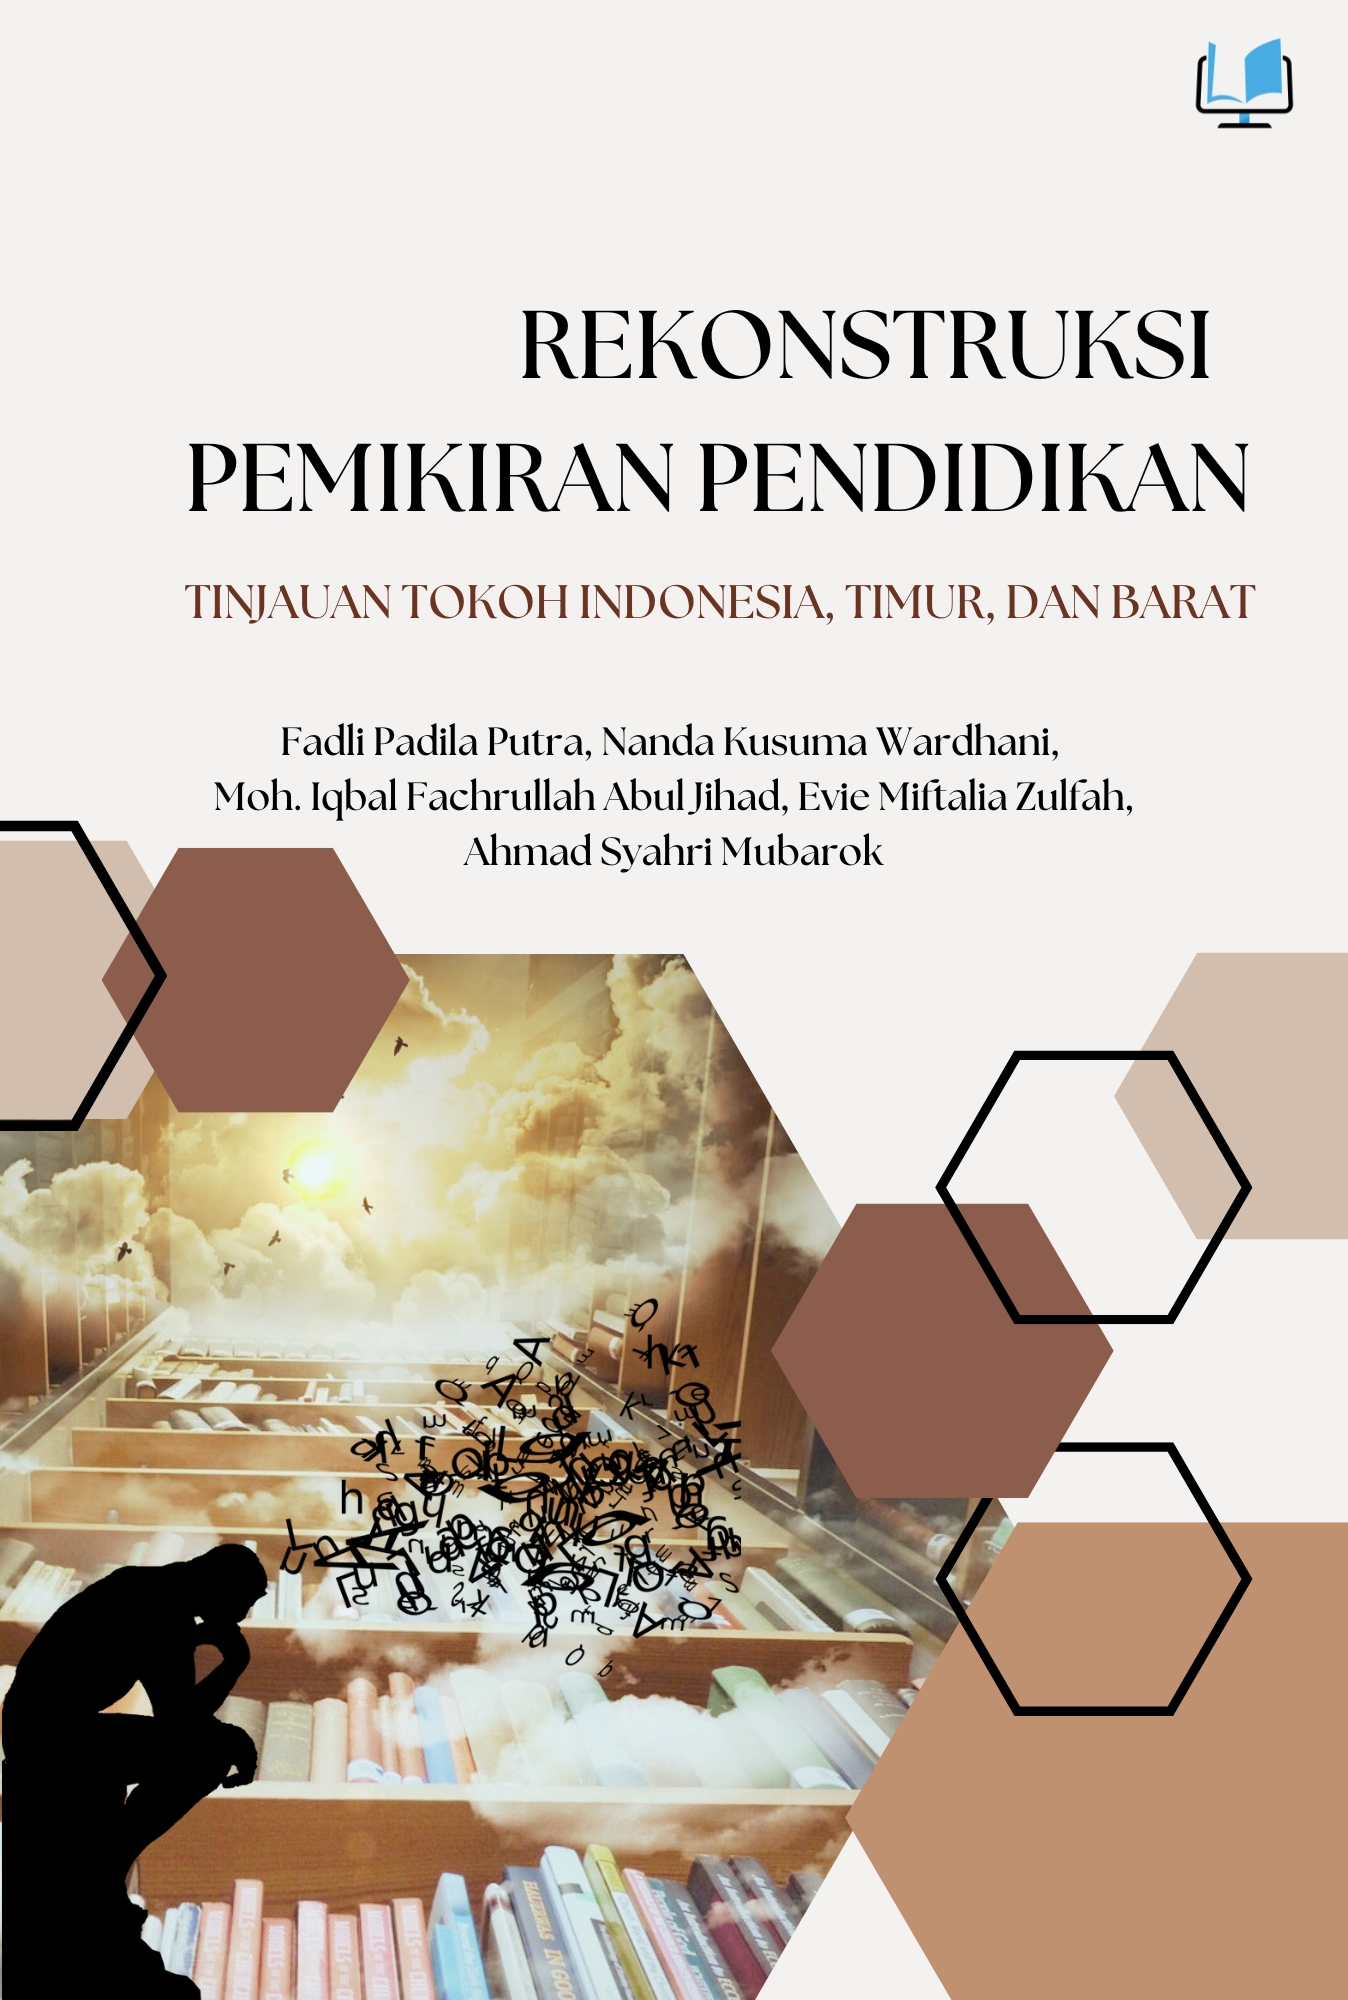 Naureen Publisher - Rekonstruksi Pemikiran Pendidikan: Tinjauan Tokoh Indonesia, Timur dan Barat